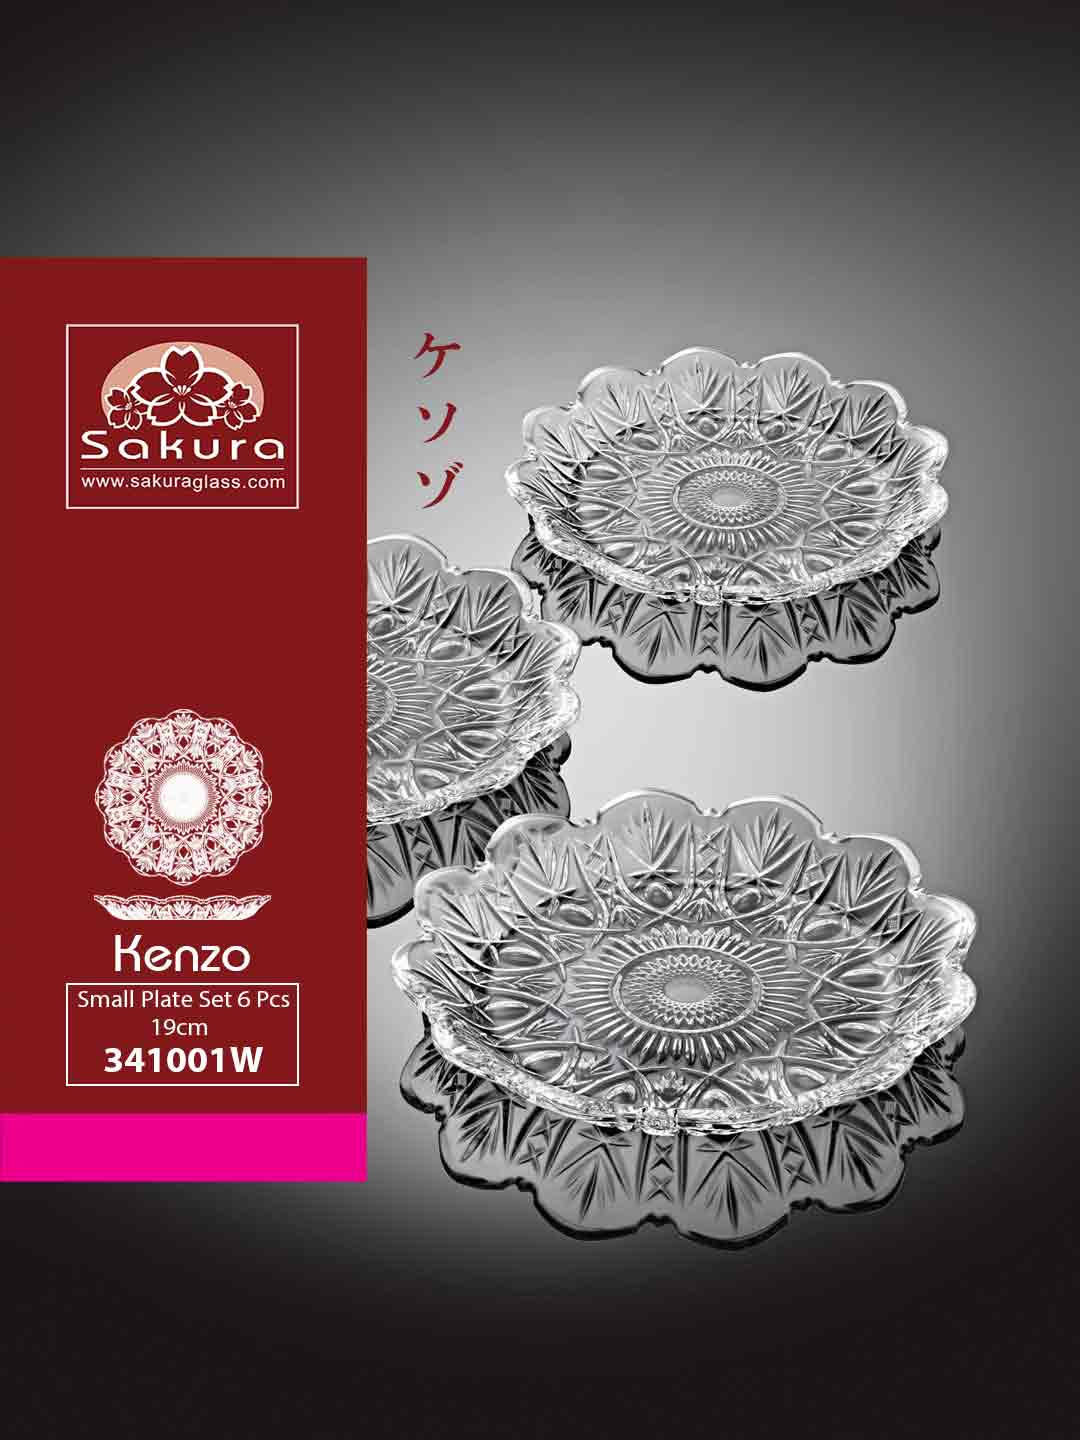 Sakura Product Kenzo Small Plate Set 6 Pcs 19cm 341001W